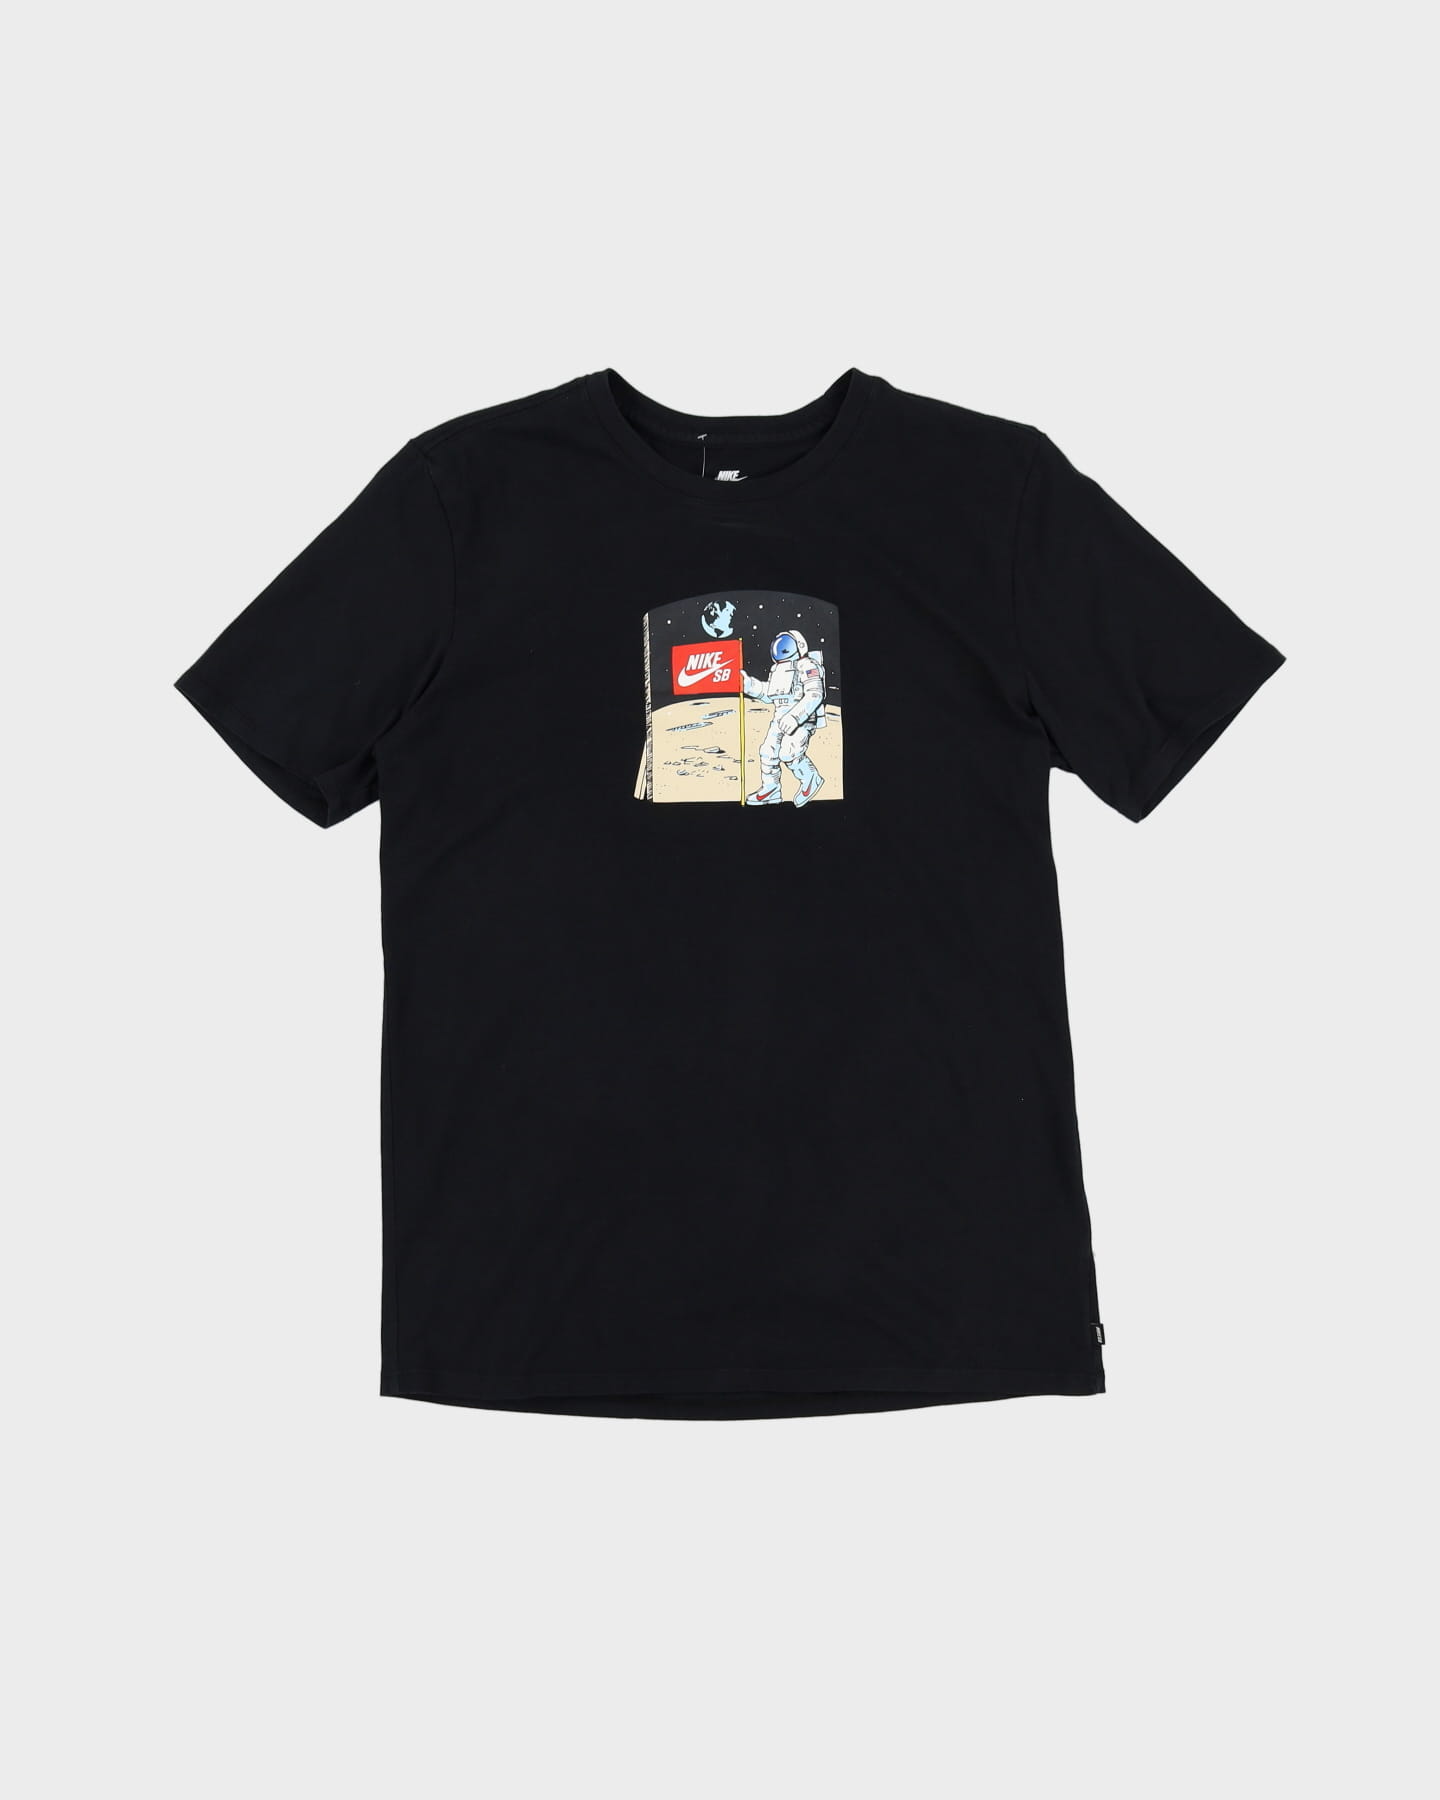 Nike SB Spaceman Cortez Graphic Black T-Shirt - S / M